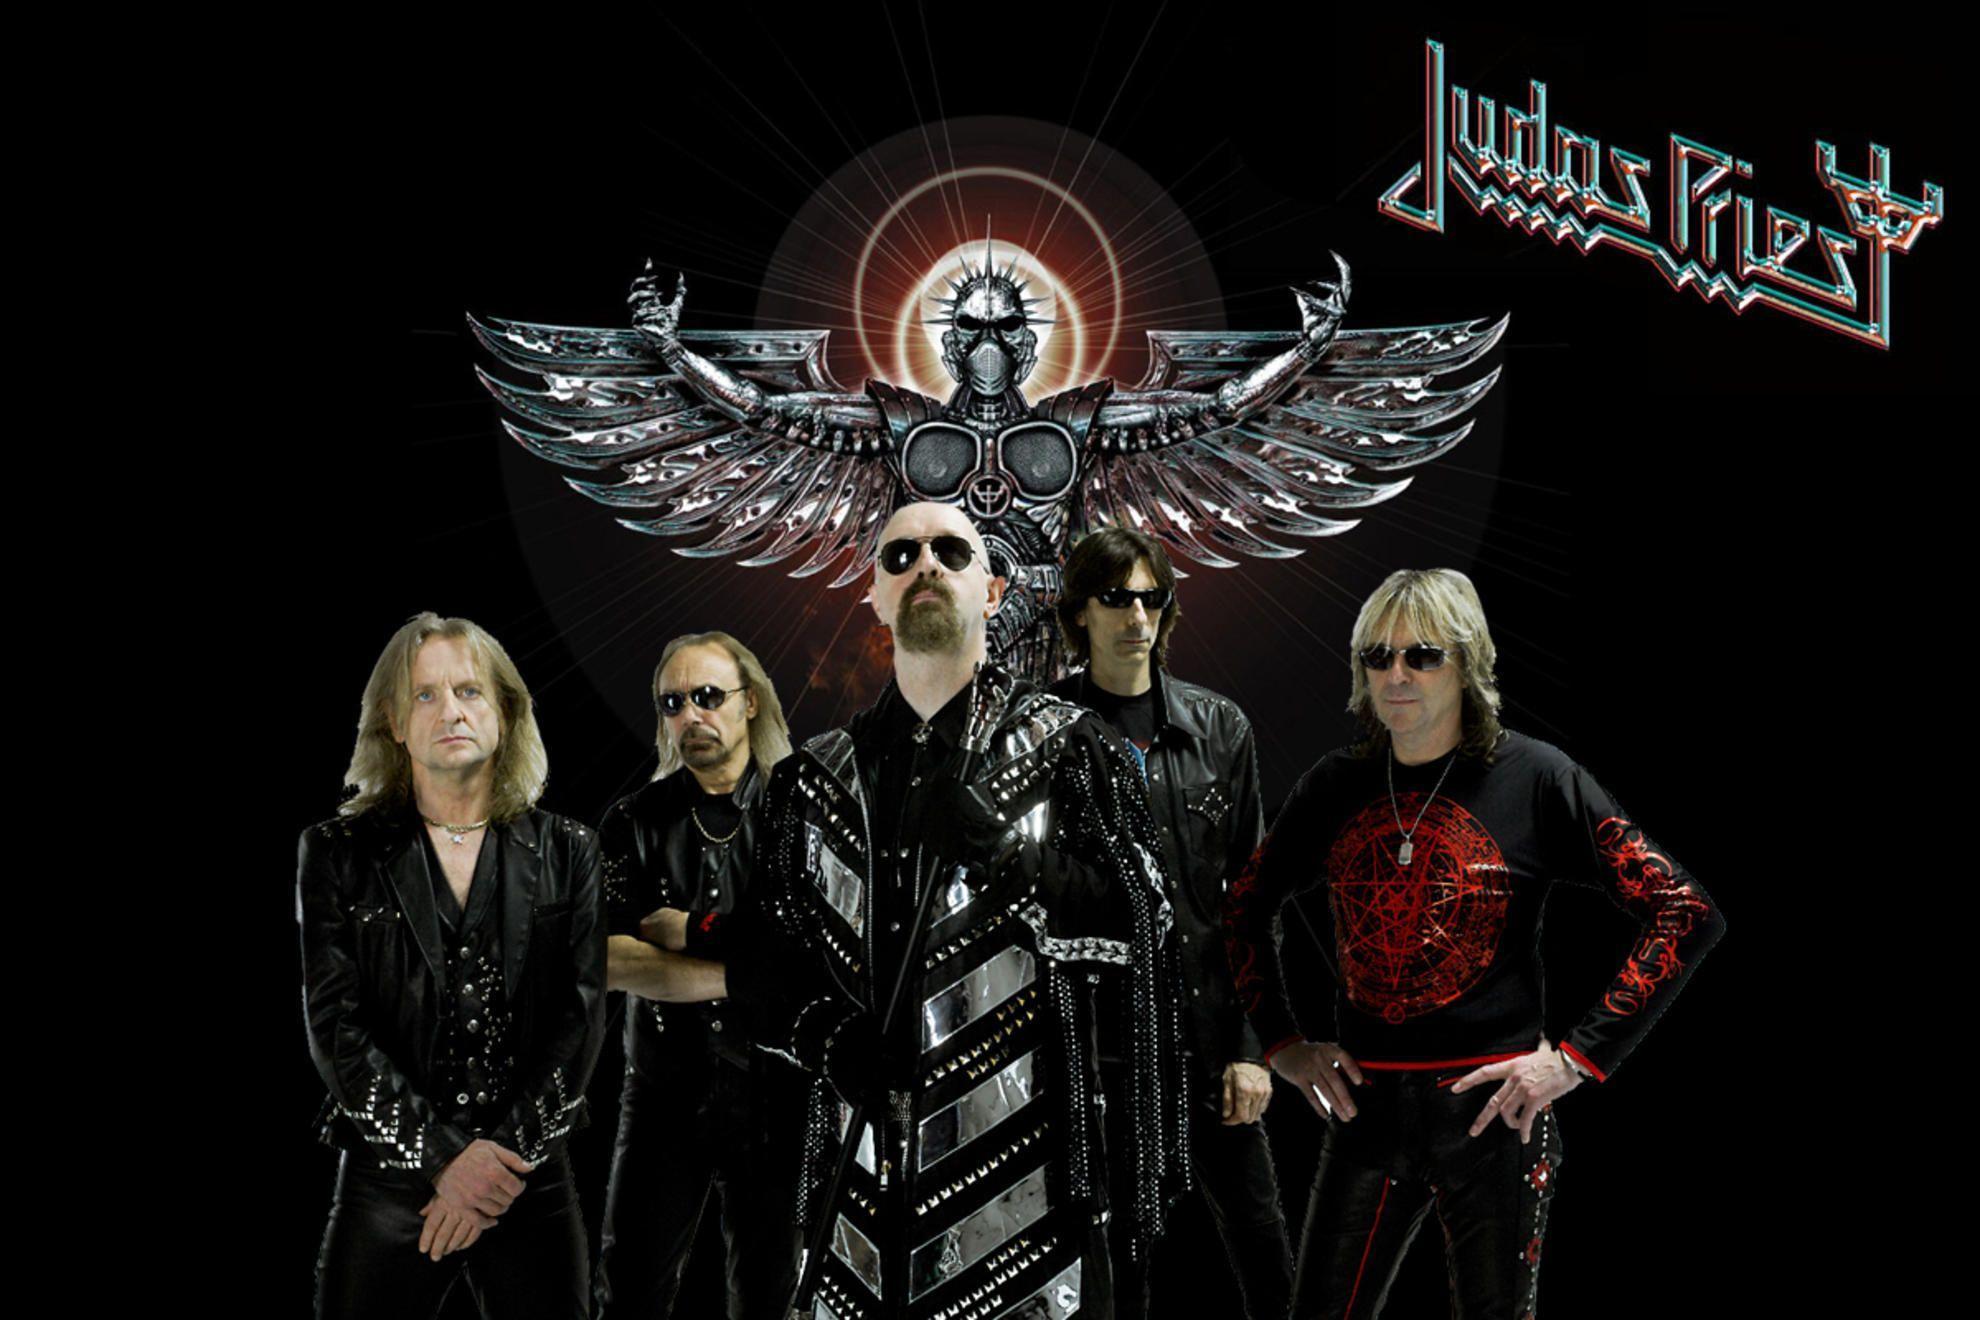 Judas Priest Wallpaper Image Photo Picture Background